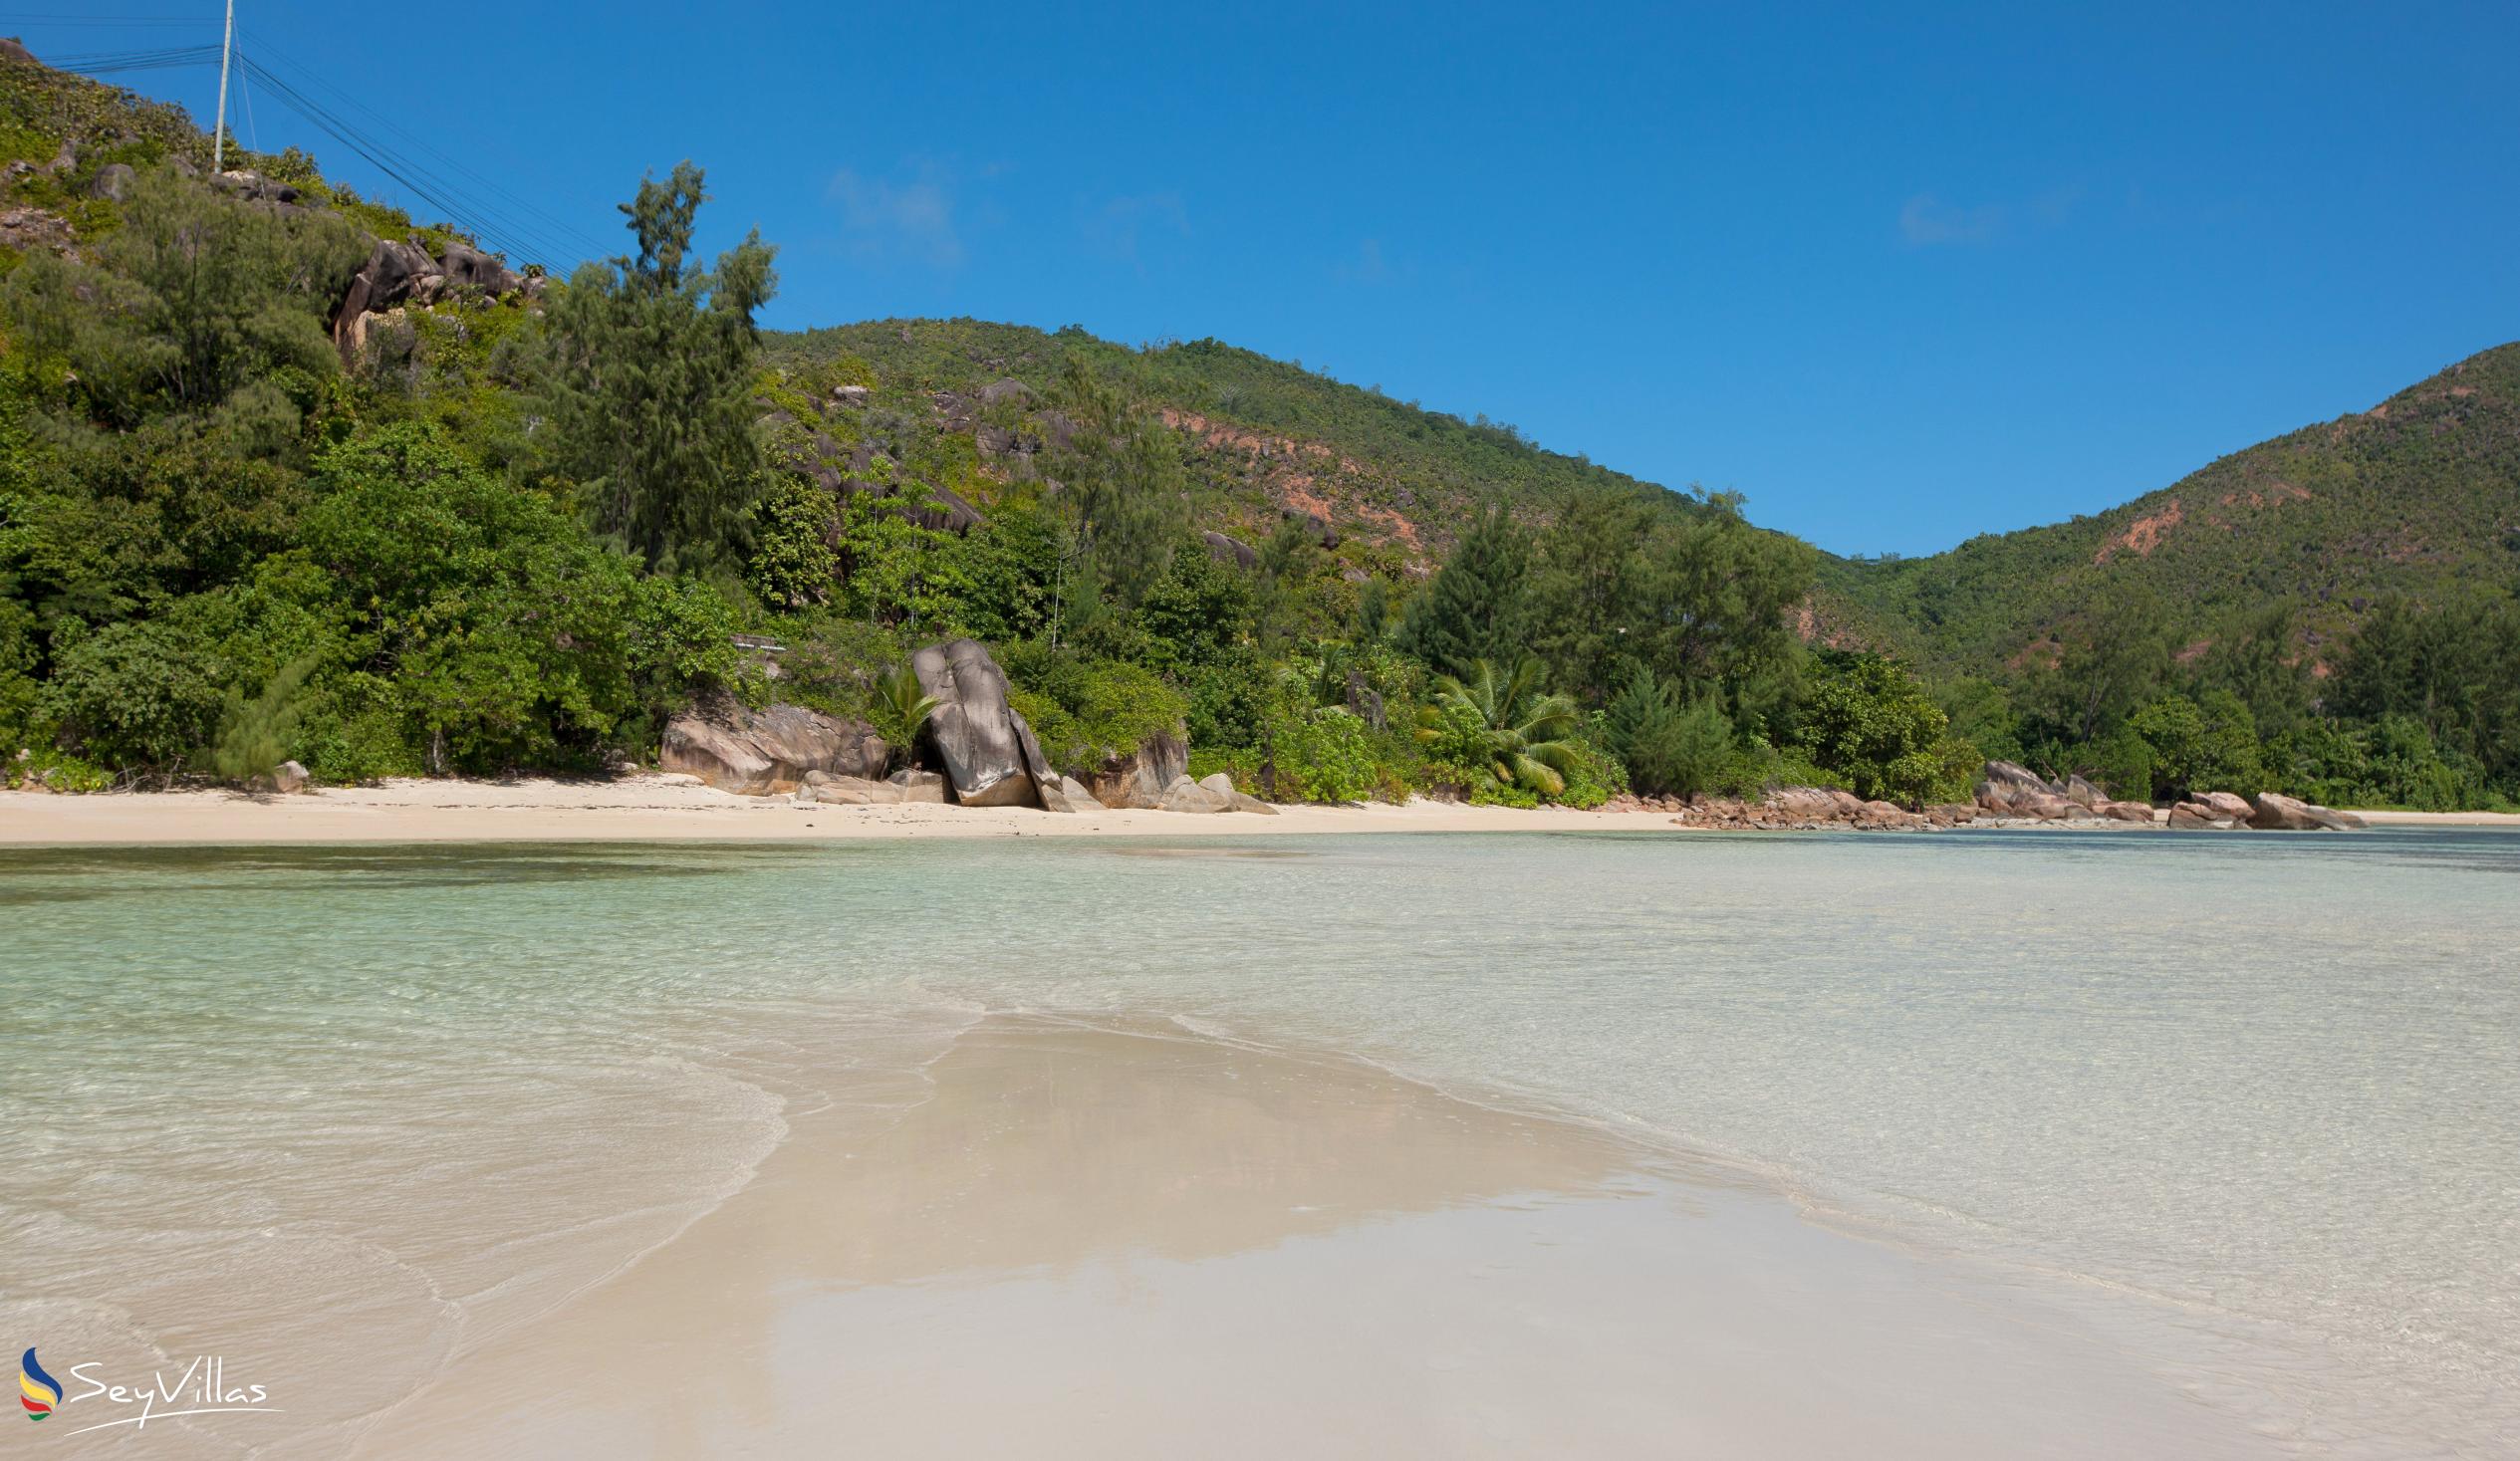 Photo 6: Anse Possession - Praslin (Seychelles)